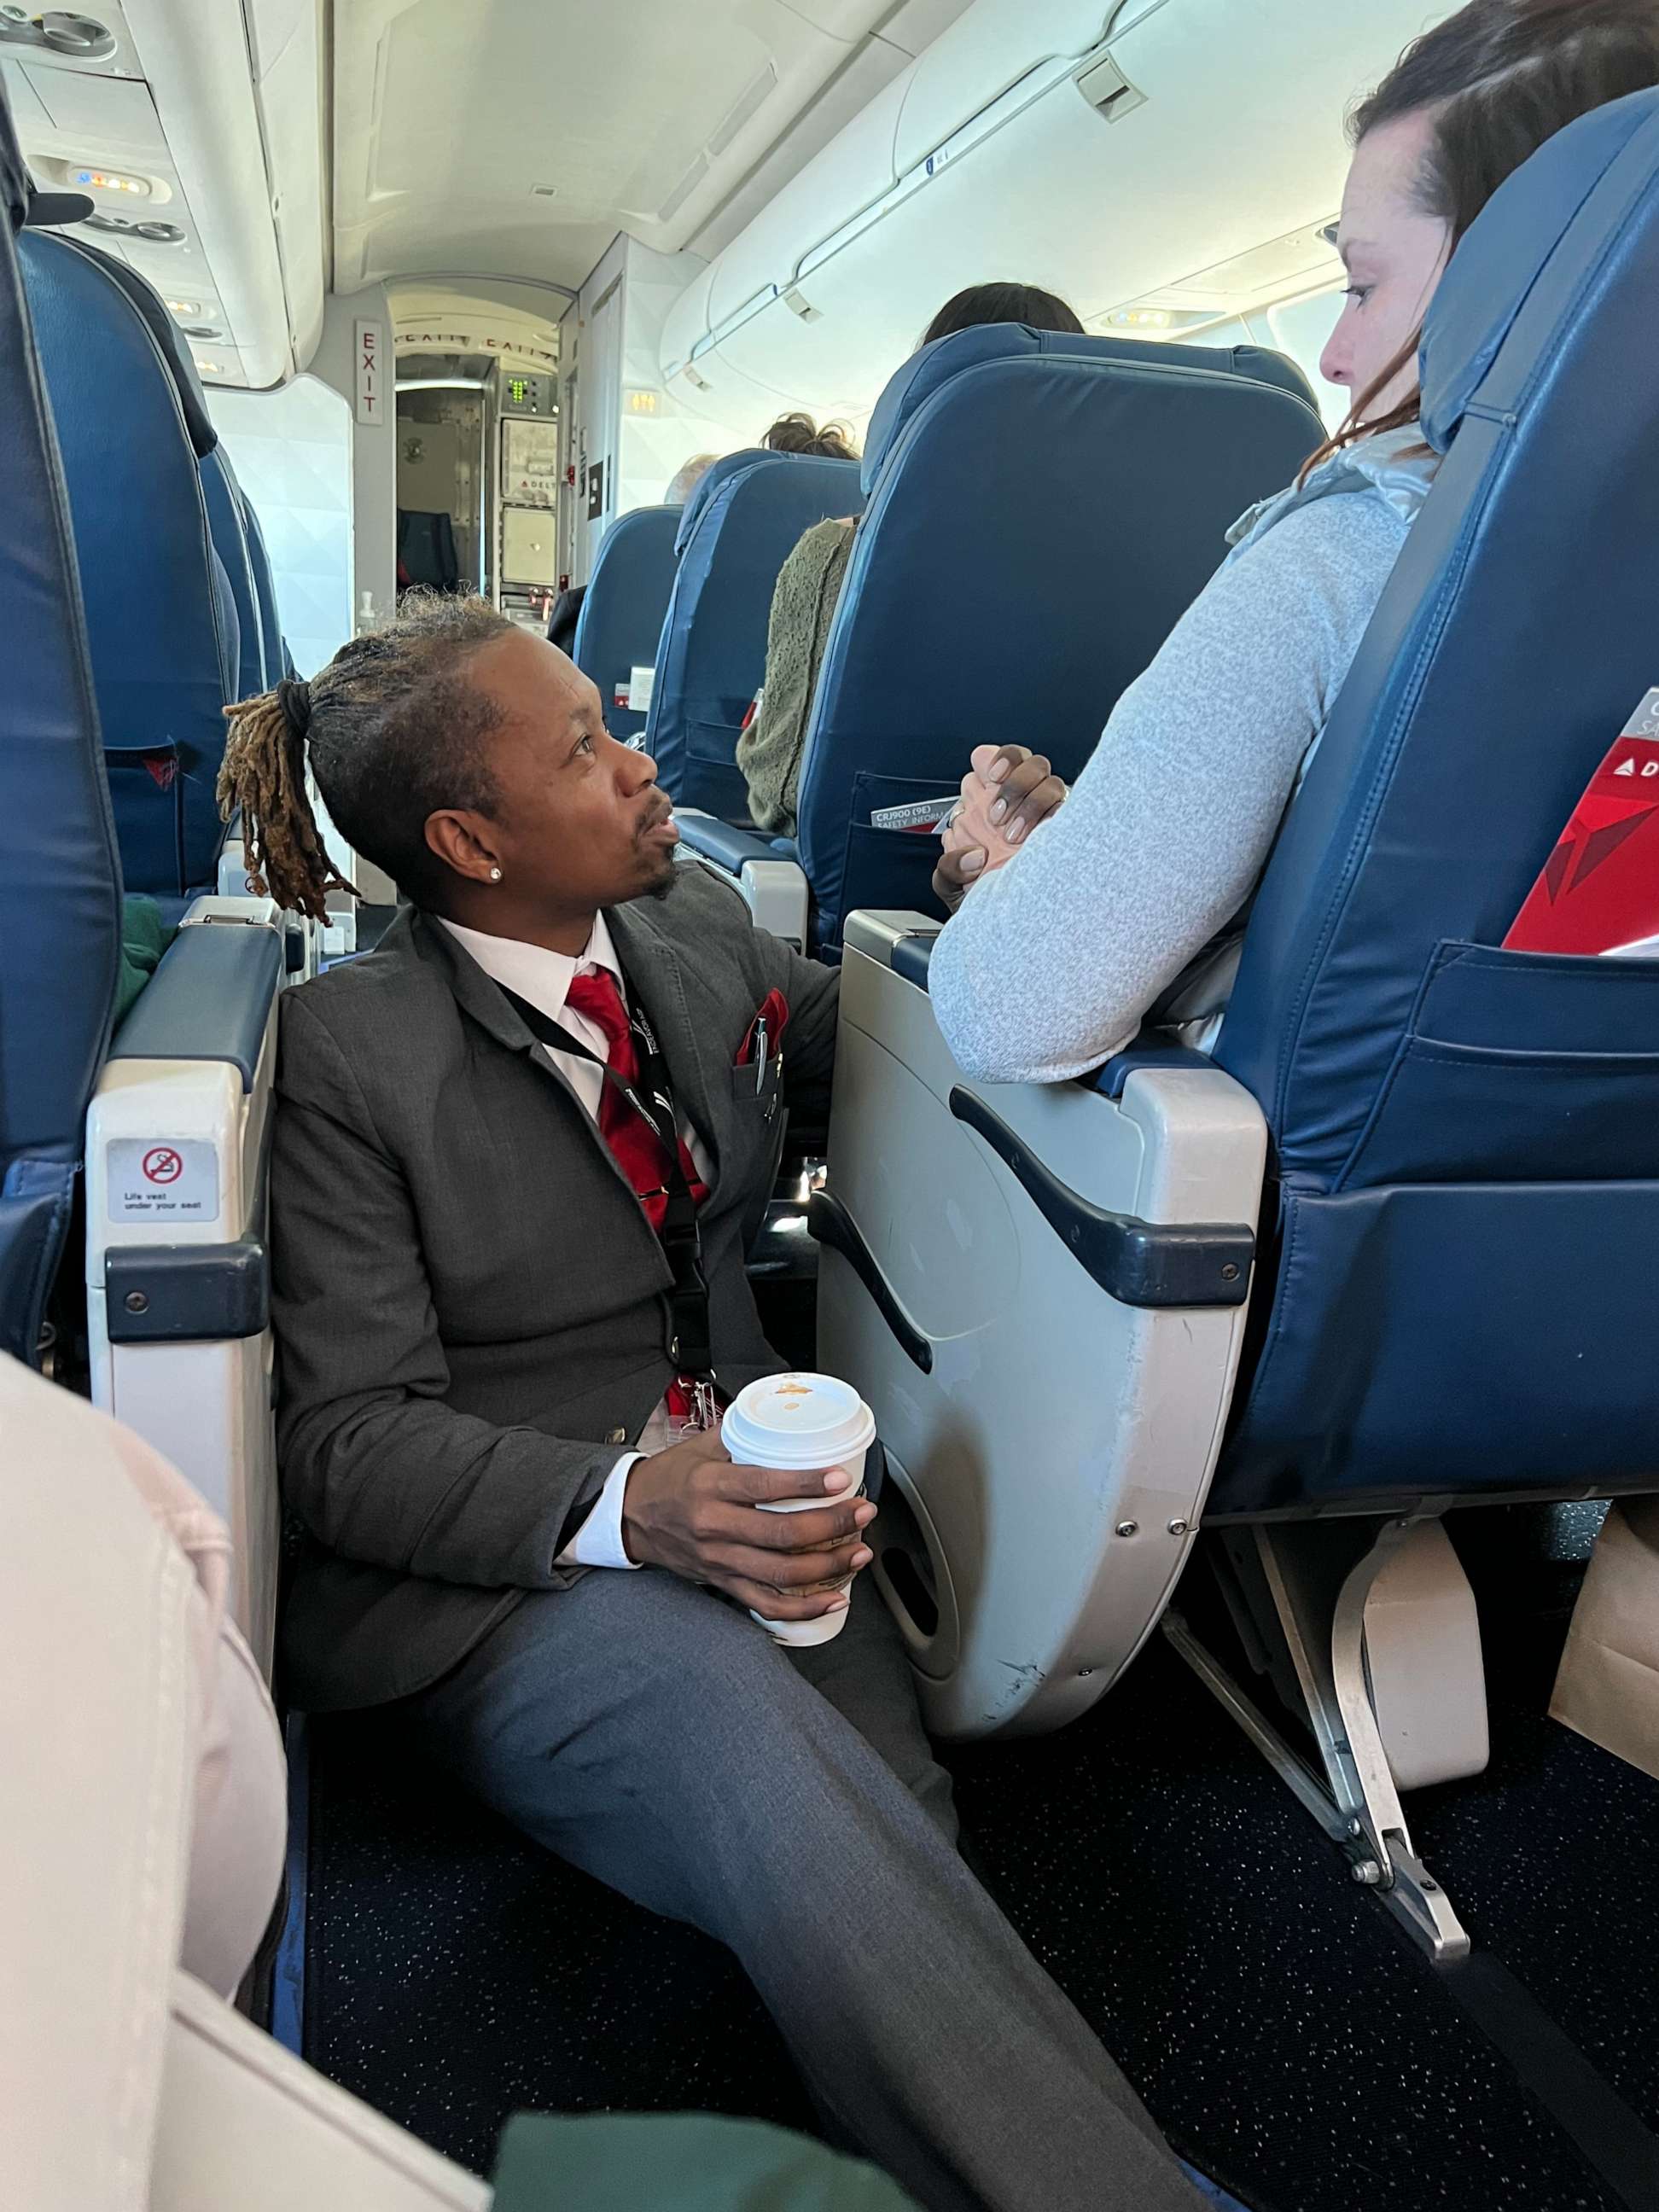 Flight attendant goes viral for helping a nervous passenger - ABC News